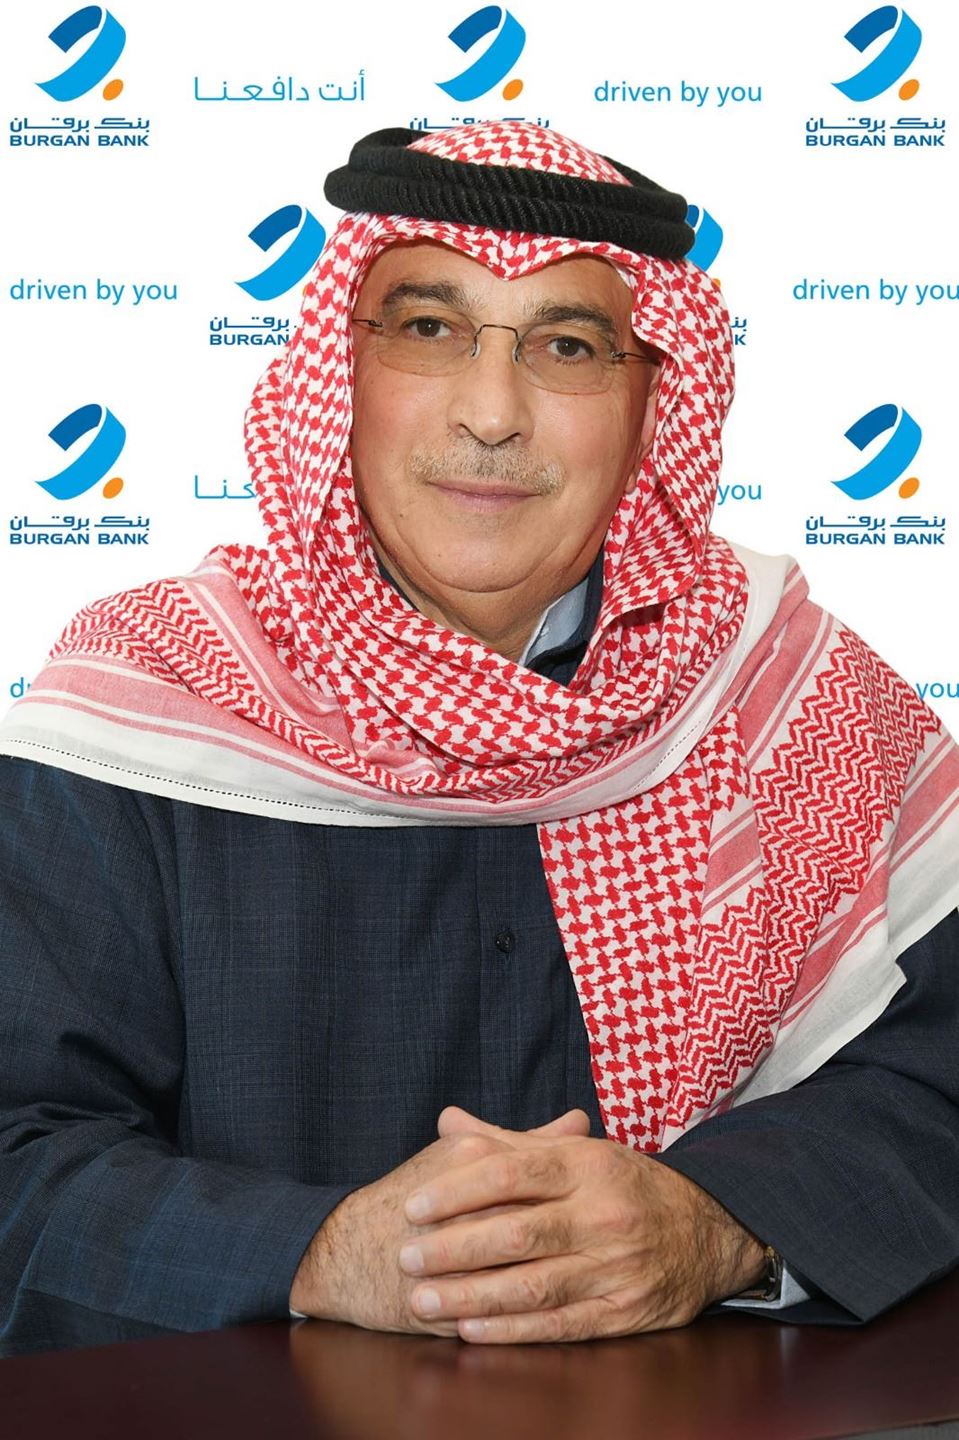 Mr. Masoud M.J. Hayat, the Vice Chairman and Group CEO of Burgan Bank Group